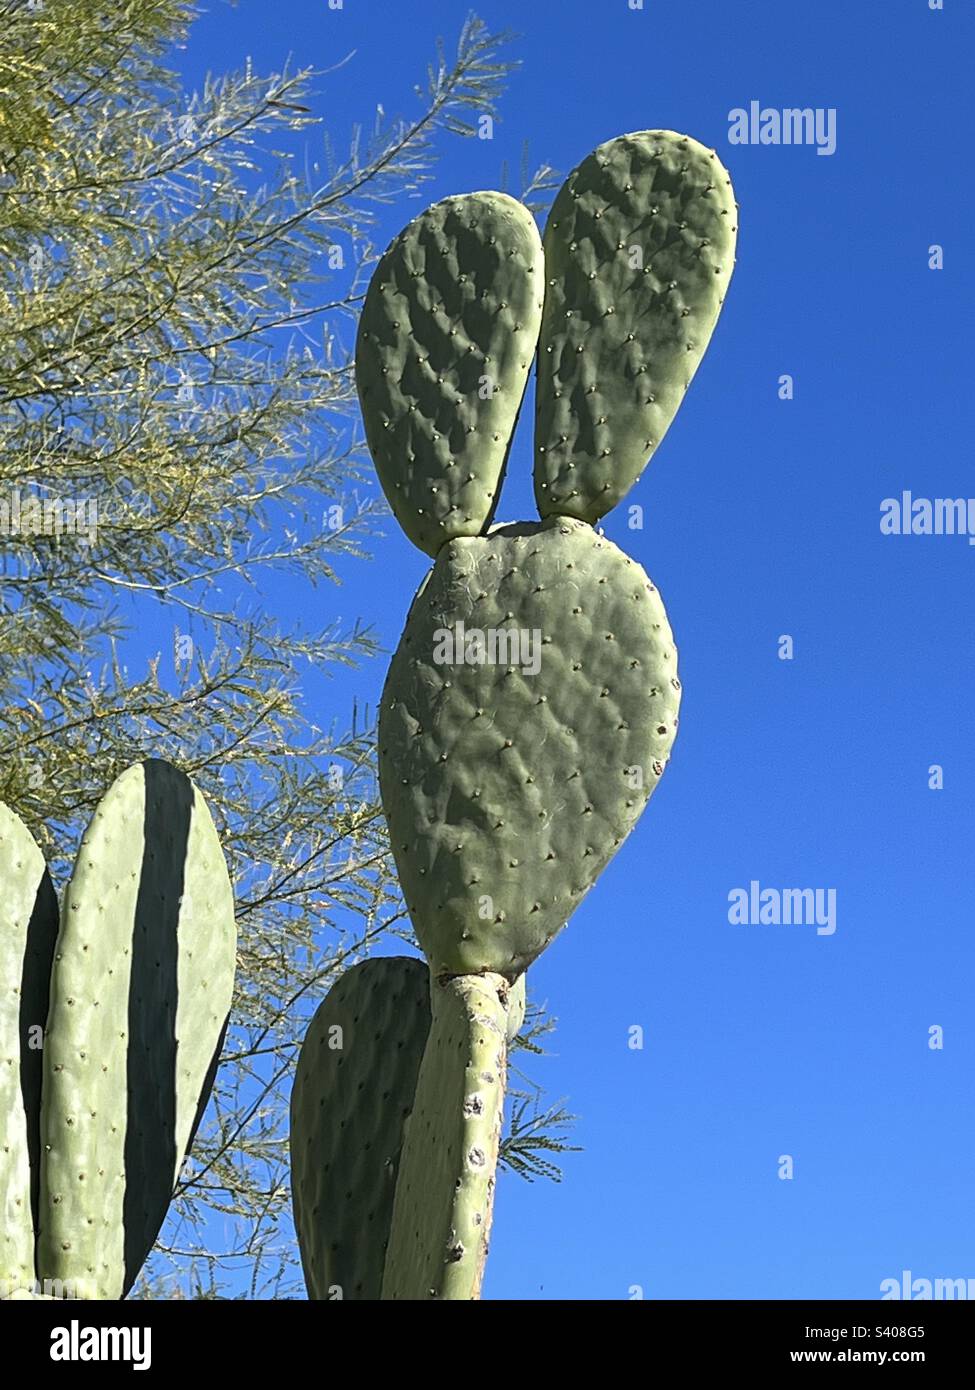 Micky mouse kaktus -Fotos und -Bildmaterial in hoher Auflösung – Alamy